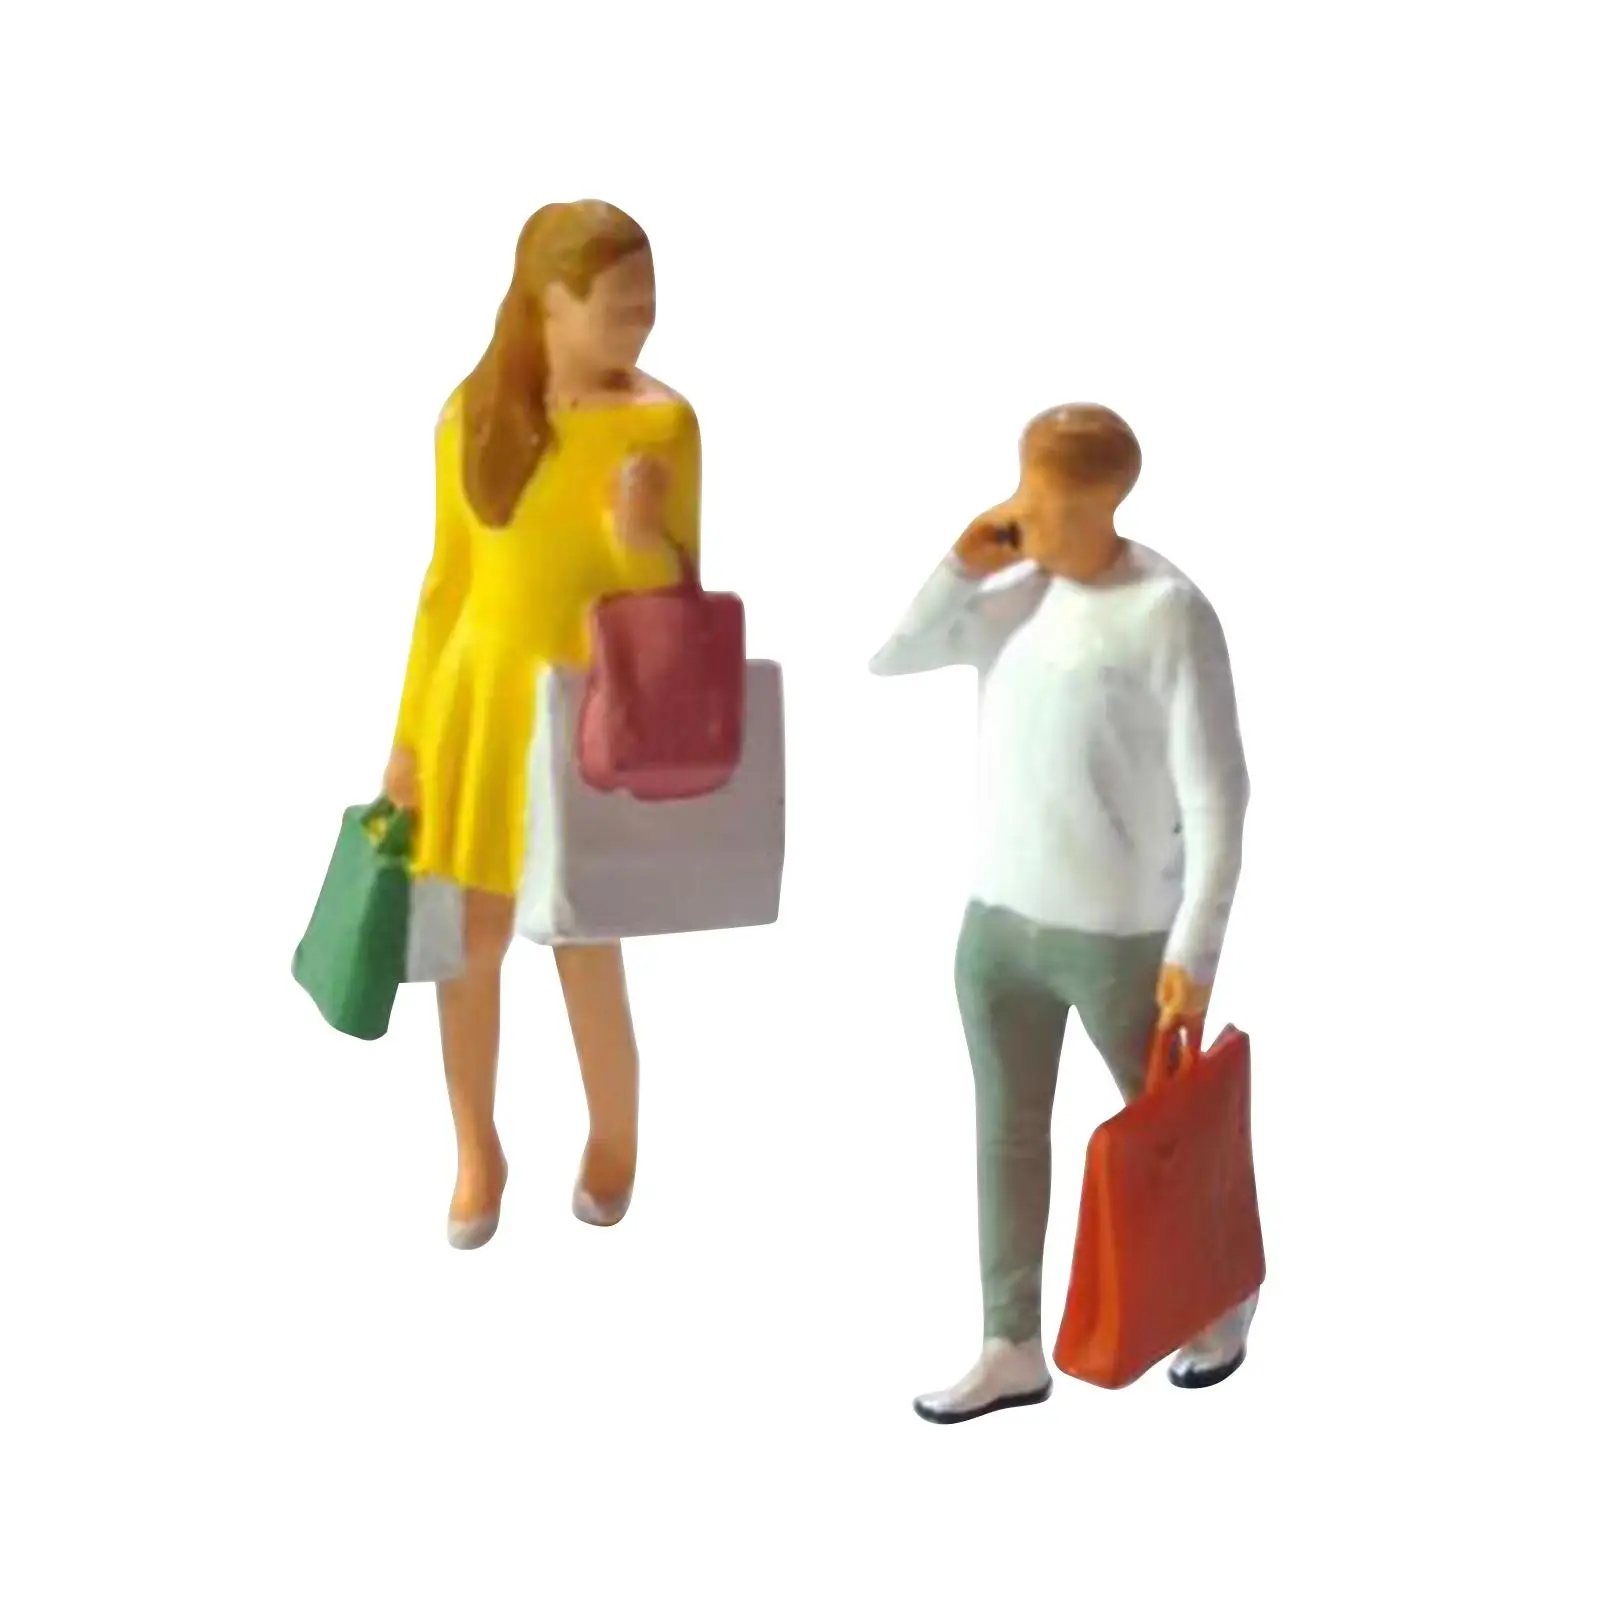 1/87 Diorama Figure Shopping Figurines Miniature Model Dollhouse Decor for Railway